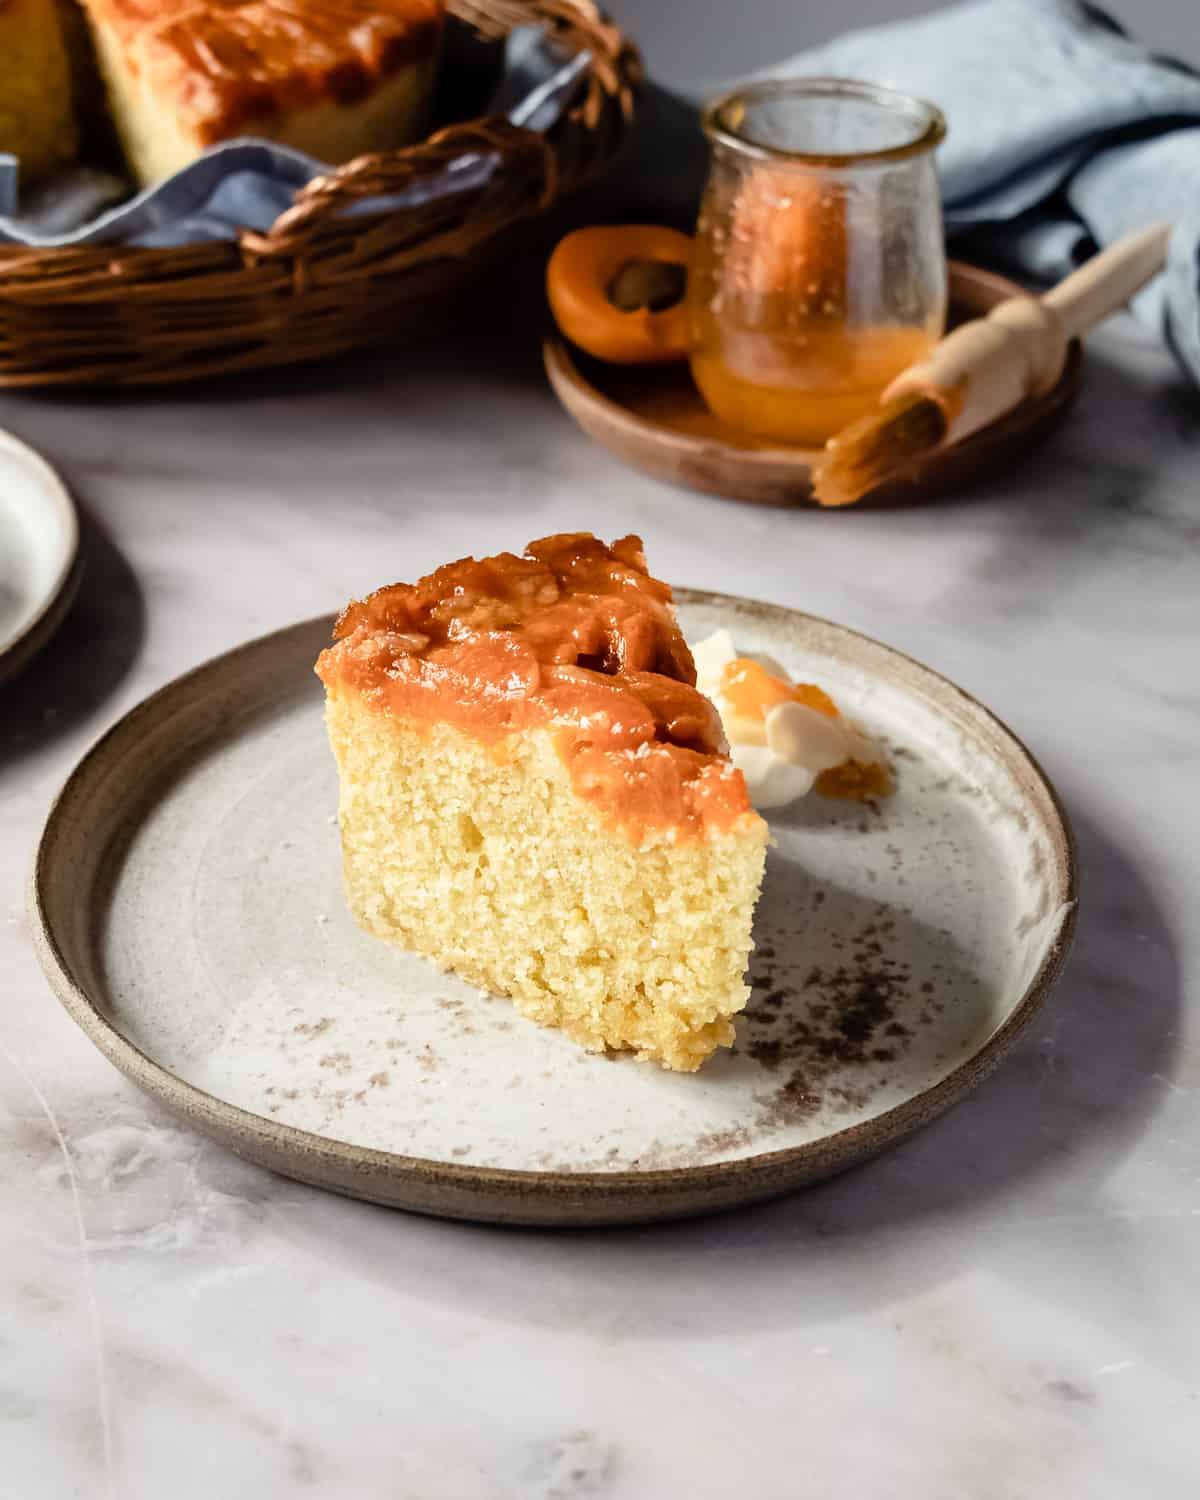 Slice of Italian almond cake on cake plate.